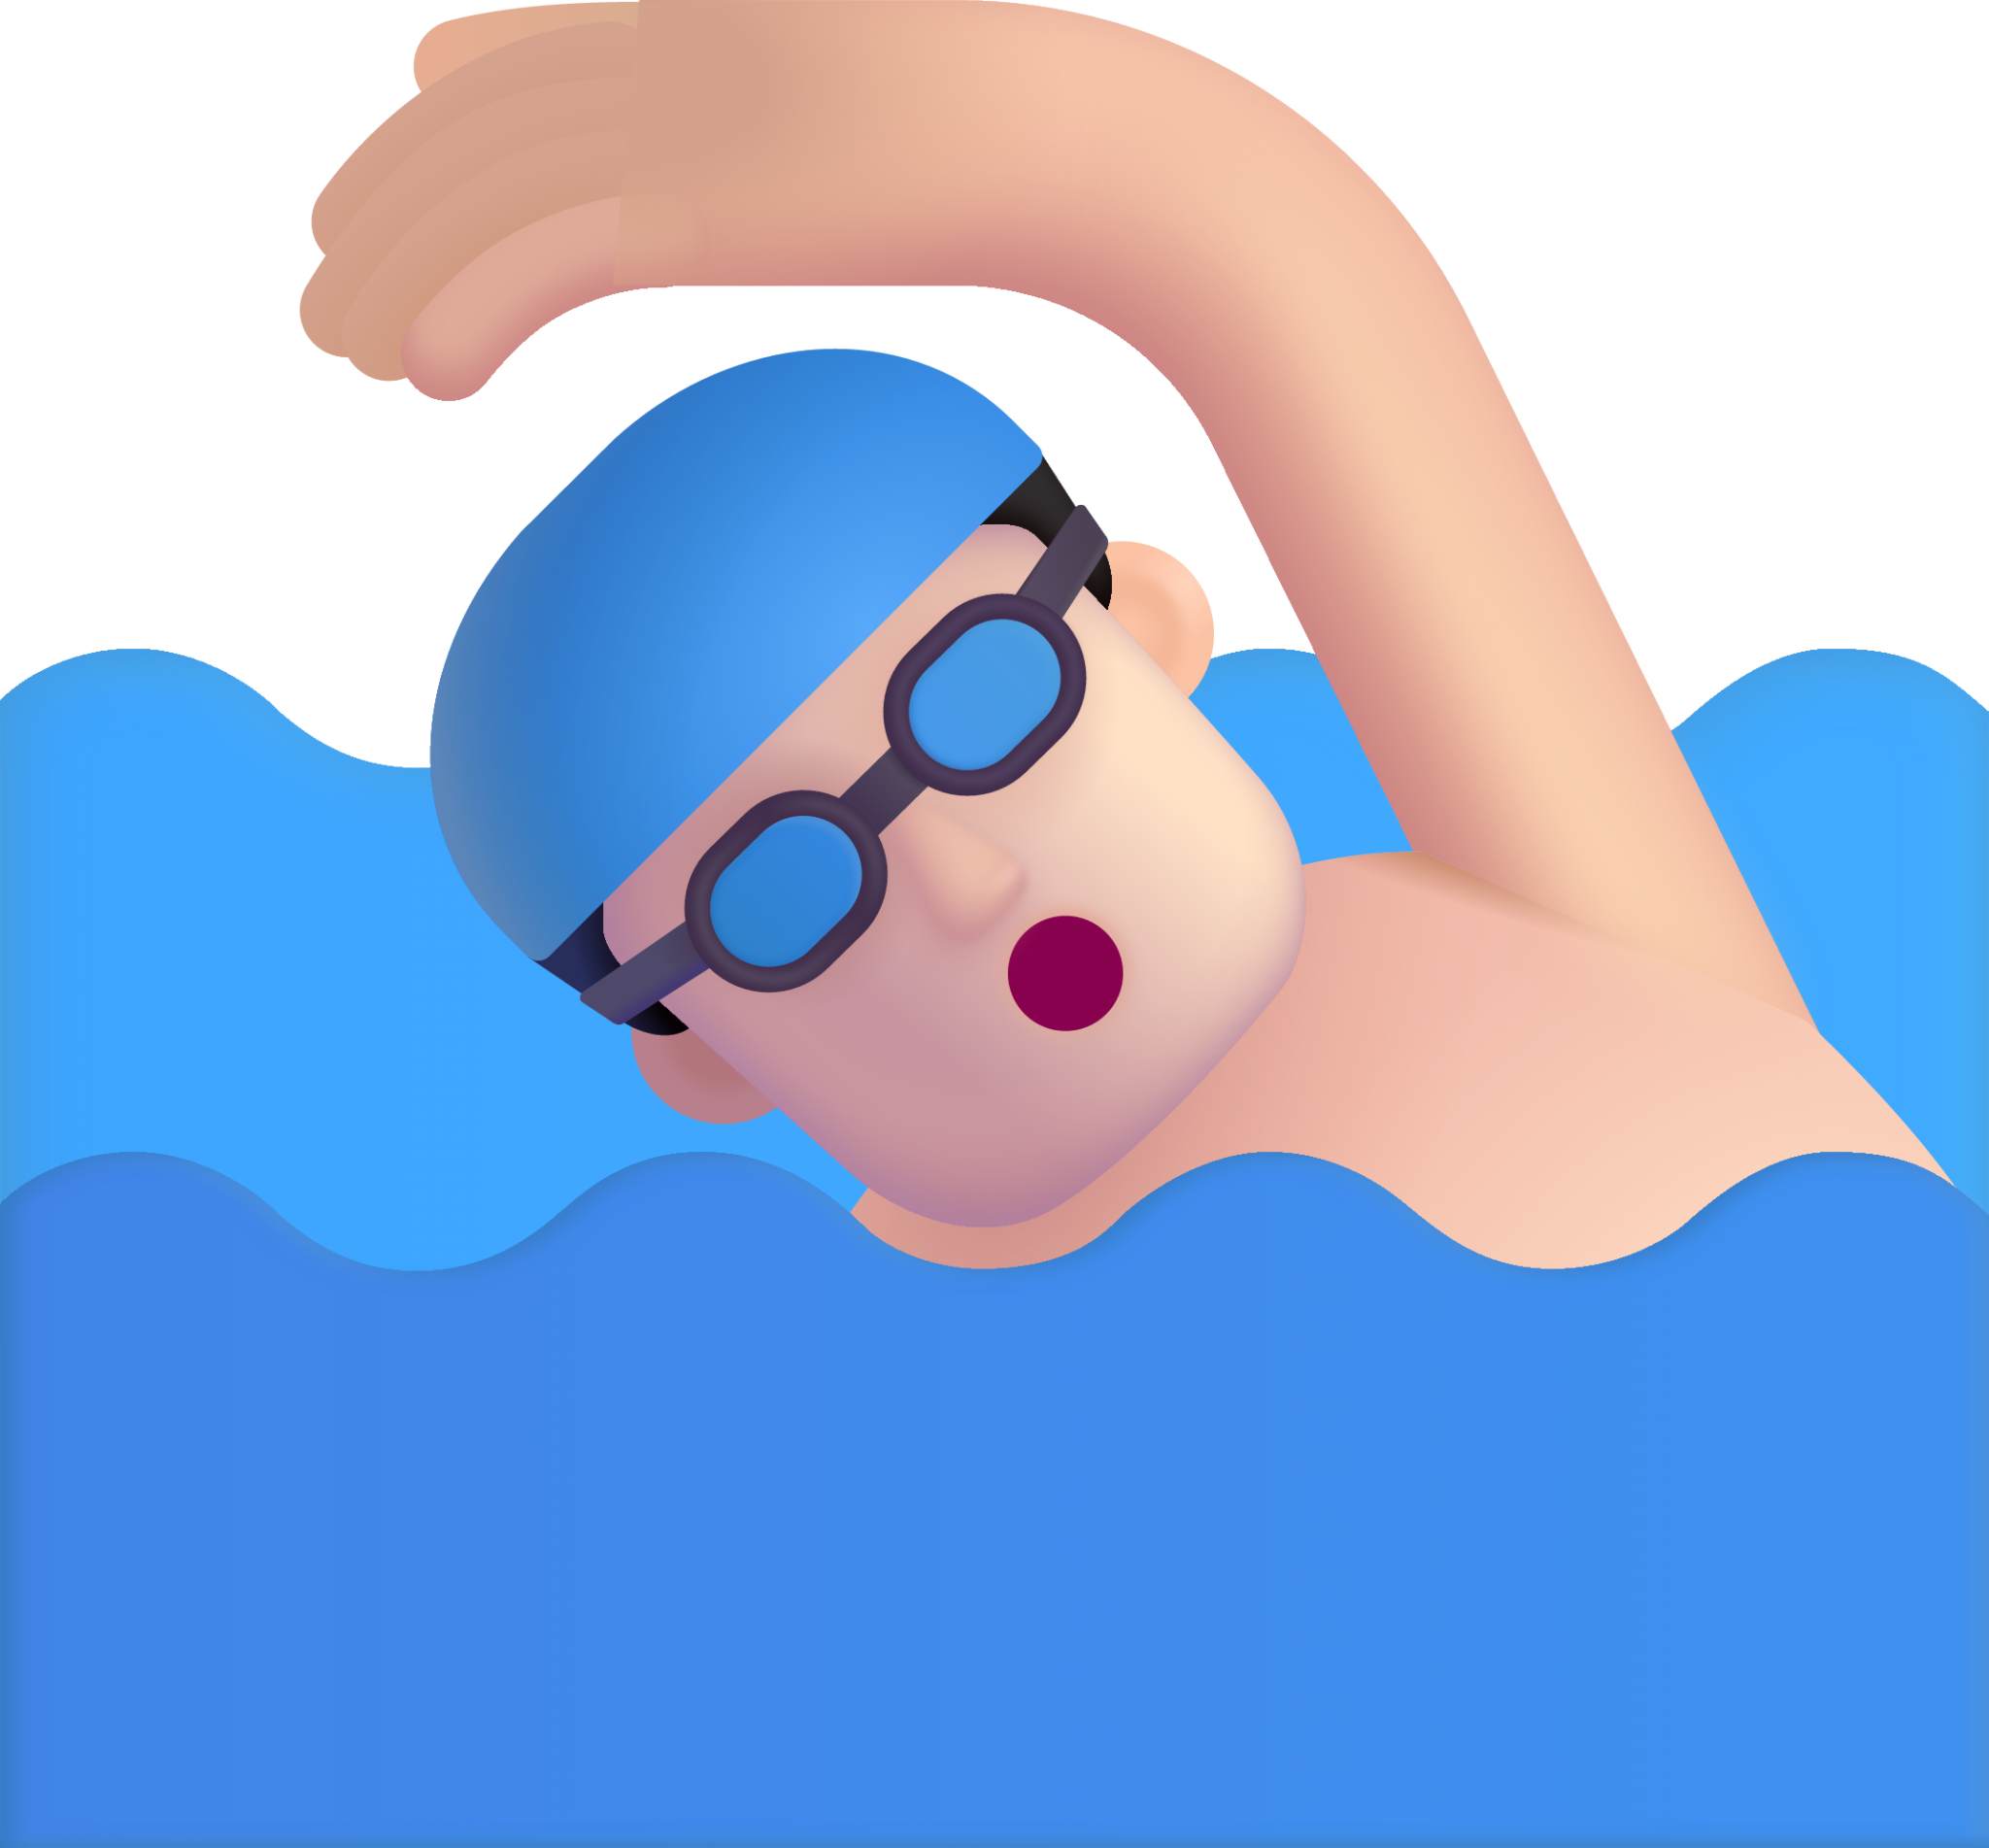 man swimming light emoji